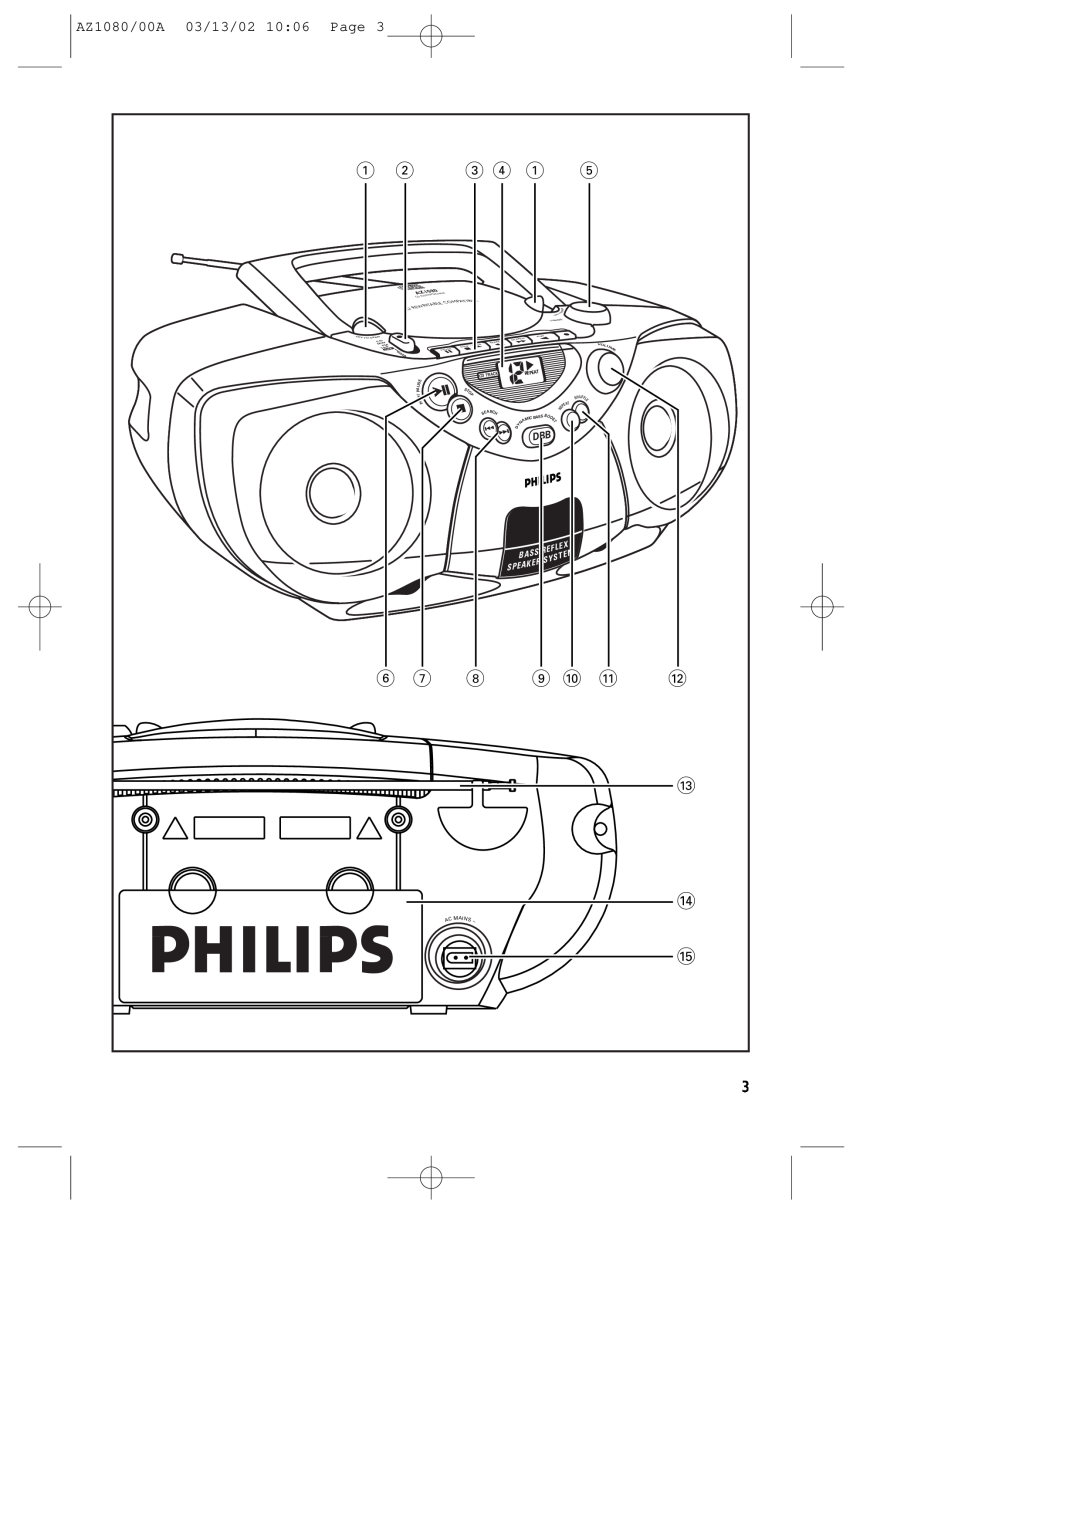 Philips AZ1081/05 manual AZ1080/00A, 03/13/02, 1006, Page, S T E, E R, C M In, Repeat, Cdtra, Ic Bass, S P E A K 